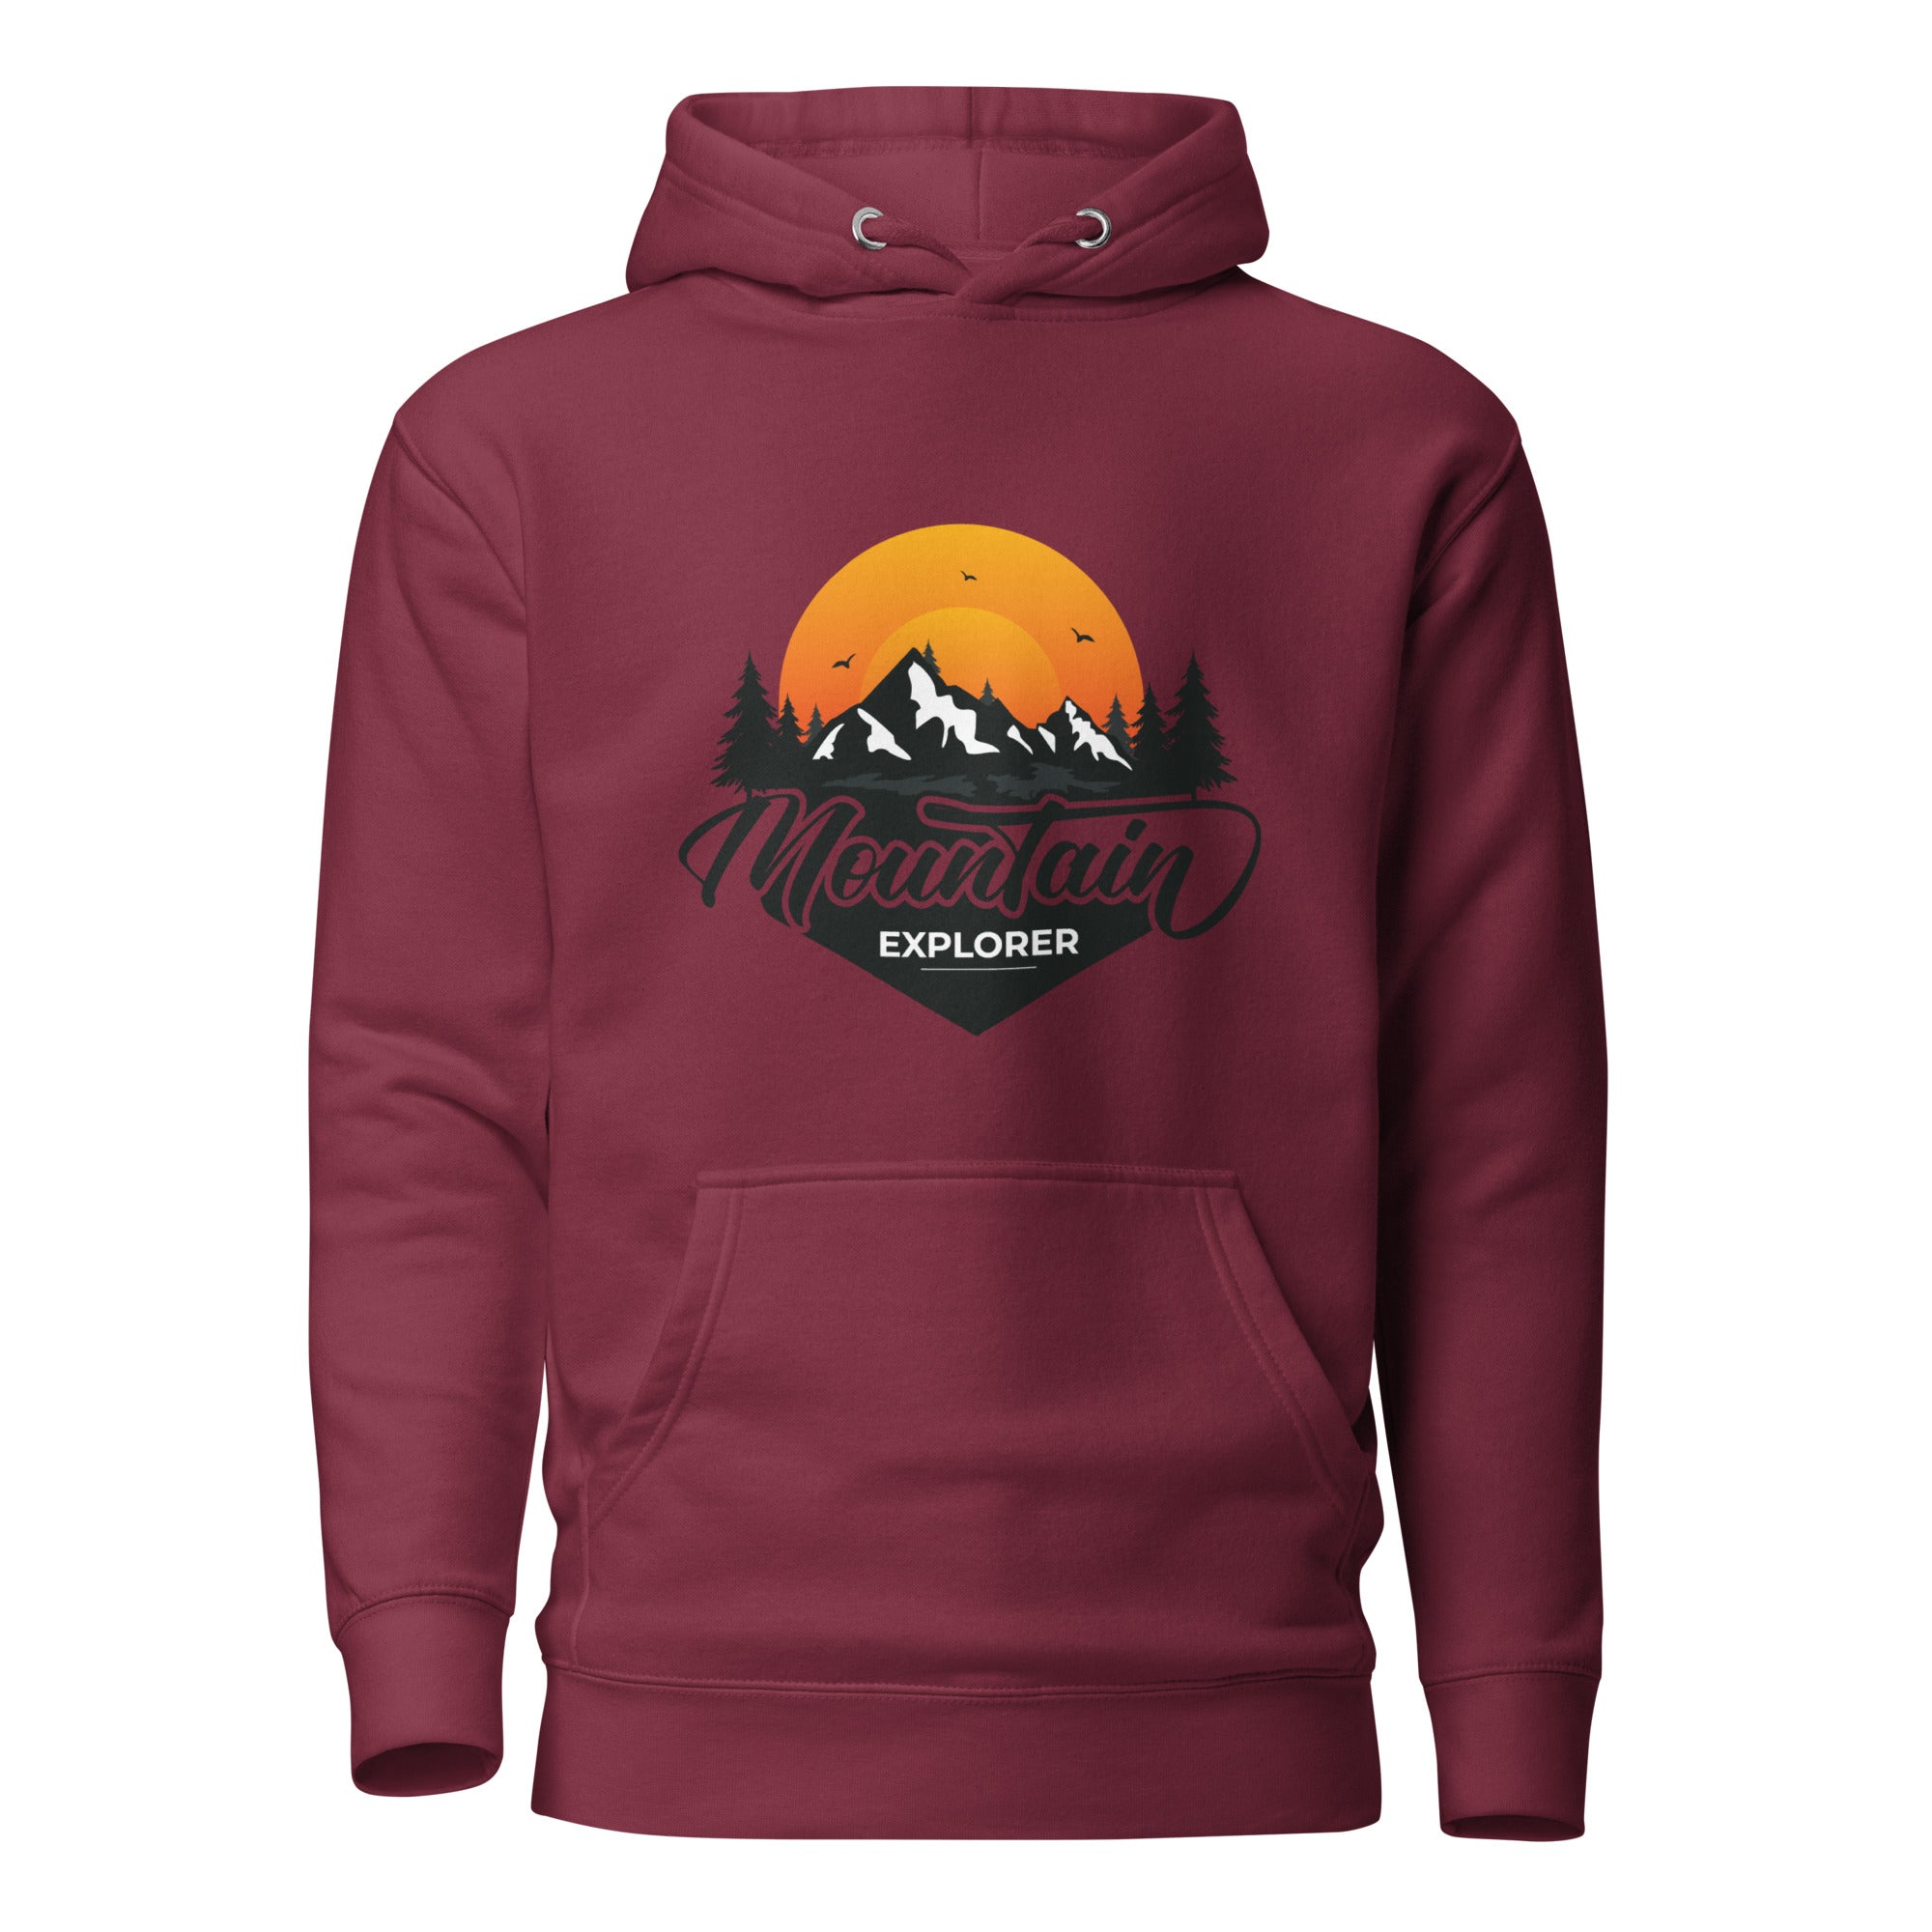 Mountain Explorer - Hoodie